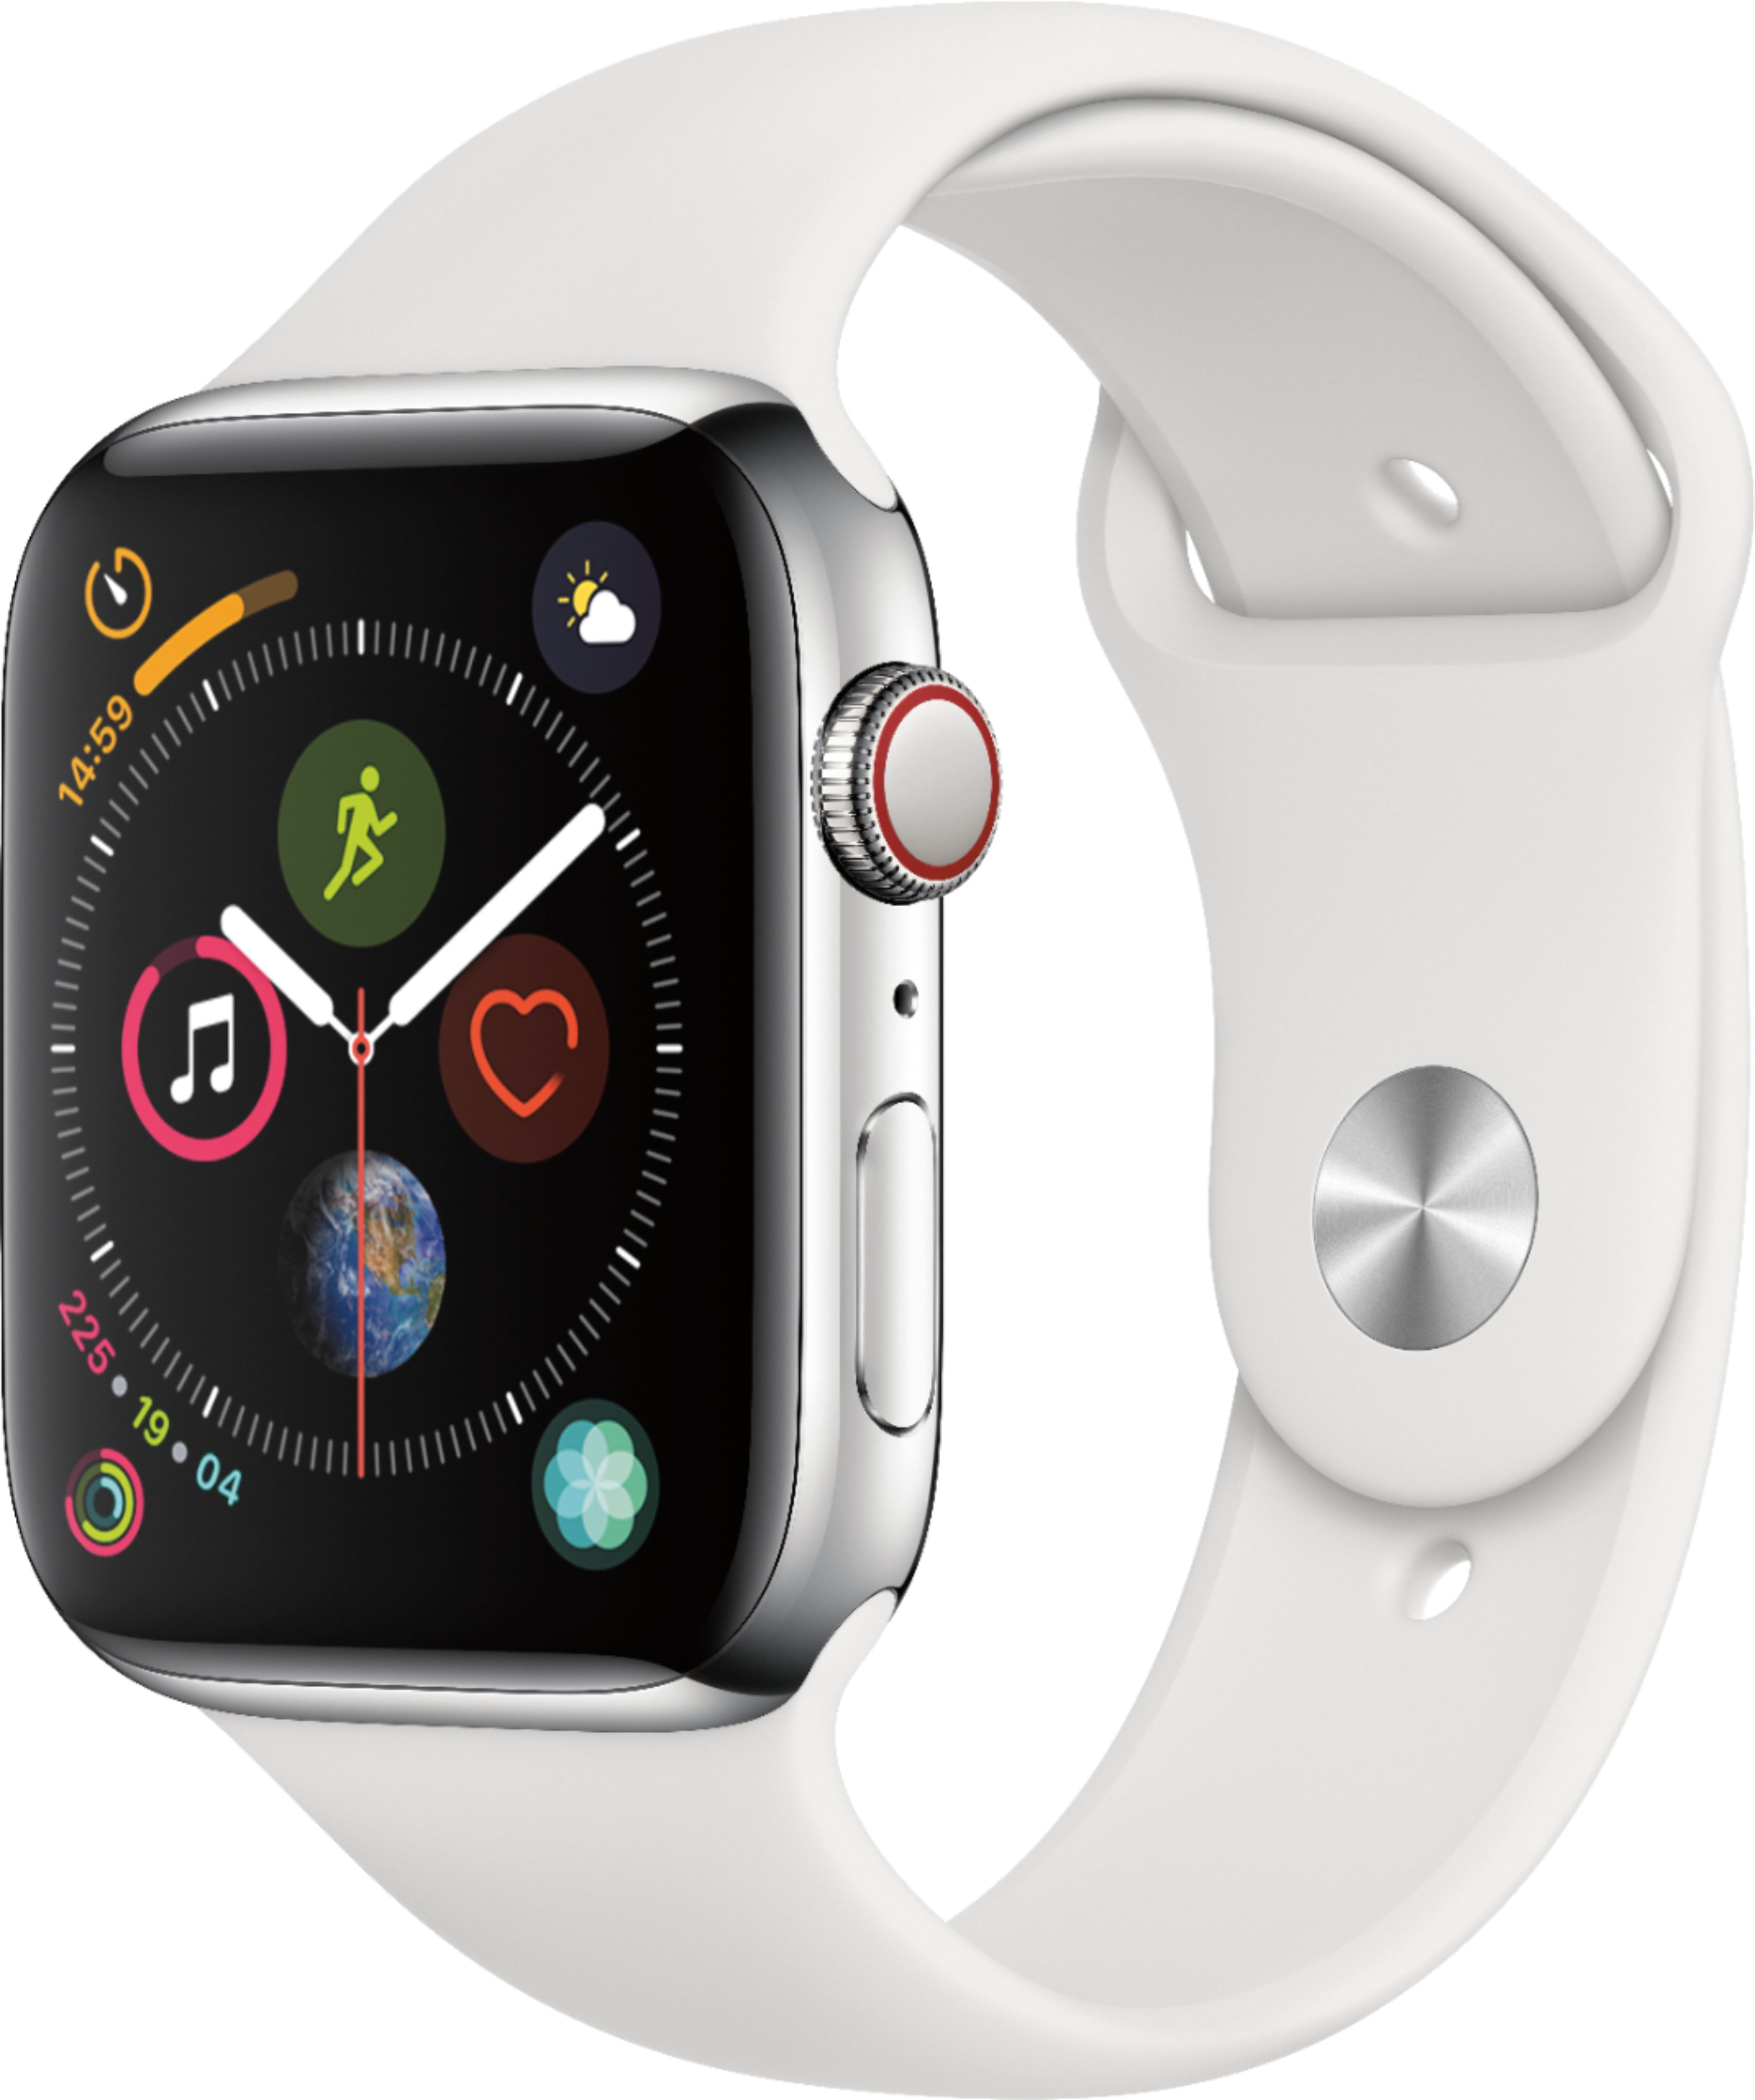 apple watch cellular model